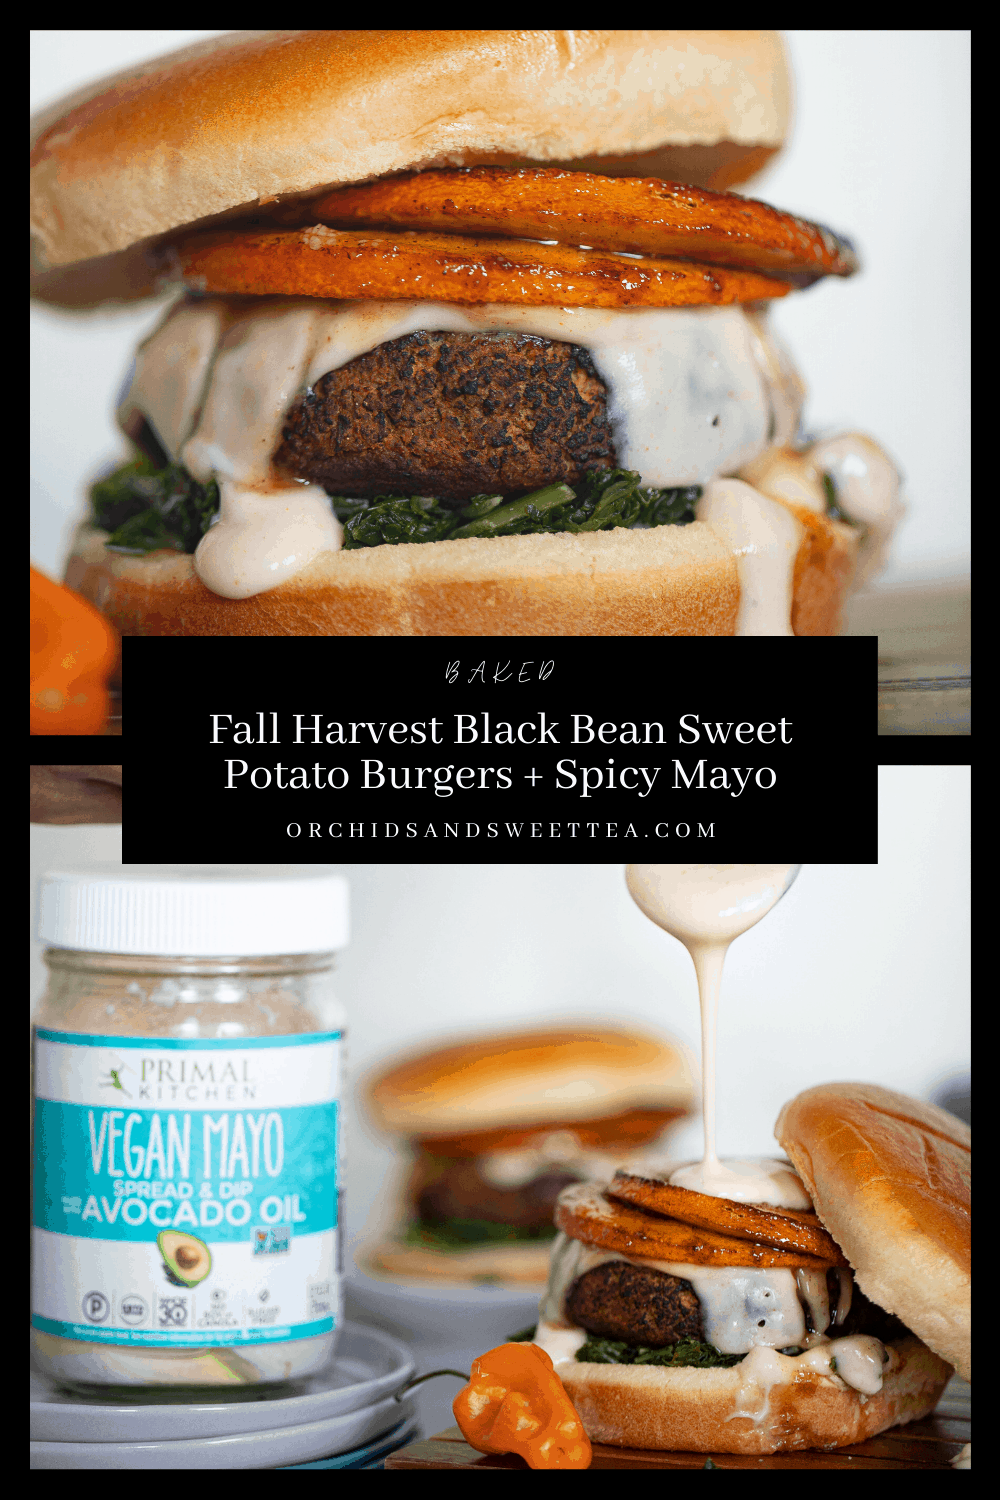 Baked Fall Harvest Black Bean Sweet Potato Burgers + Spicy Mayo